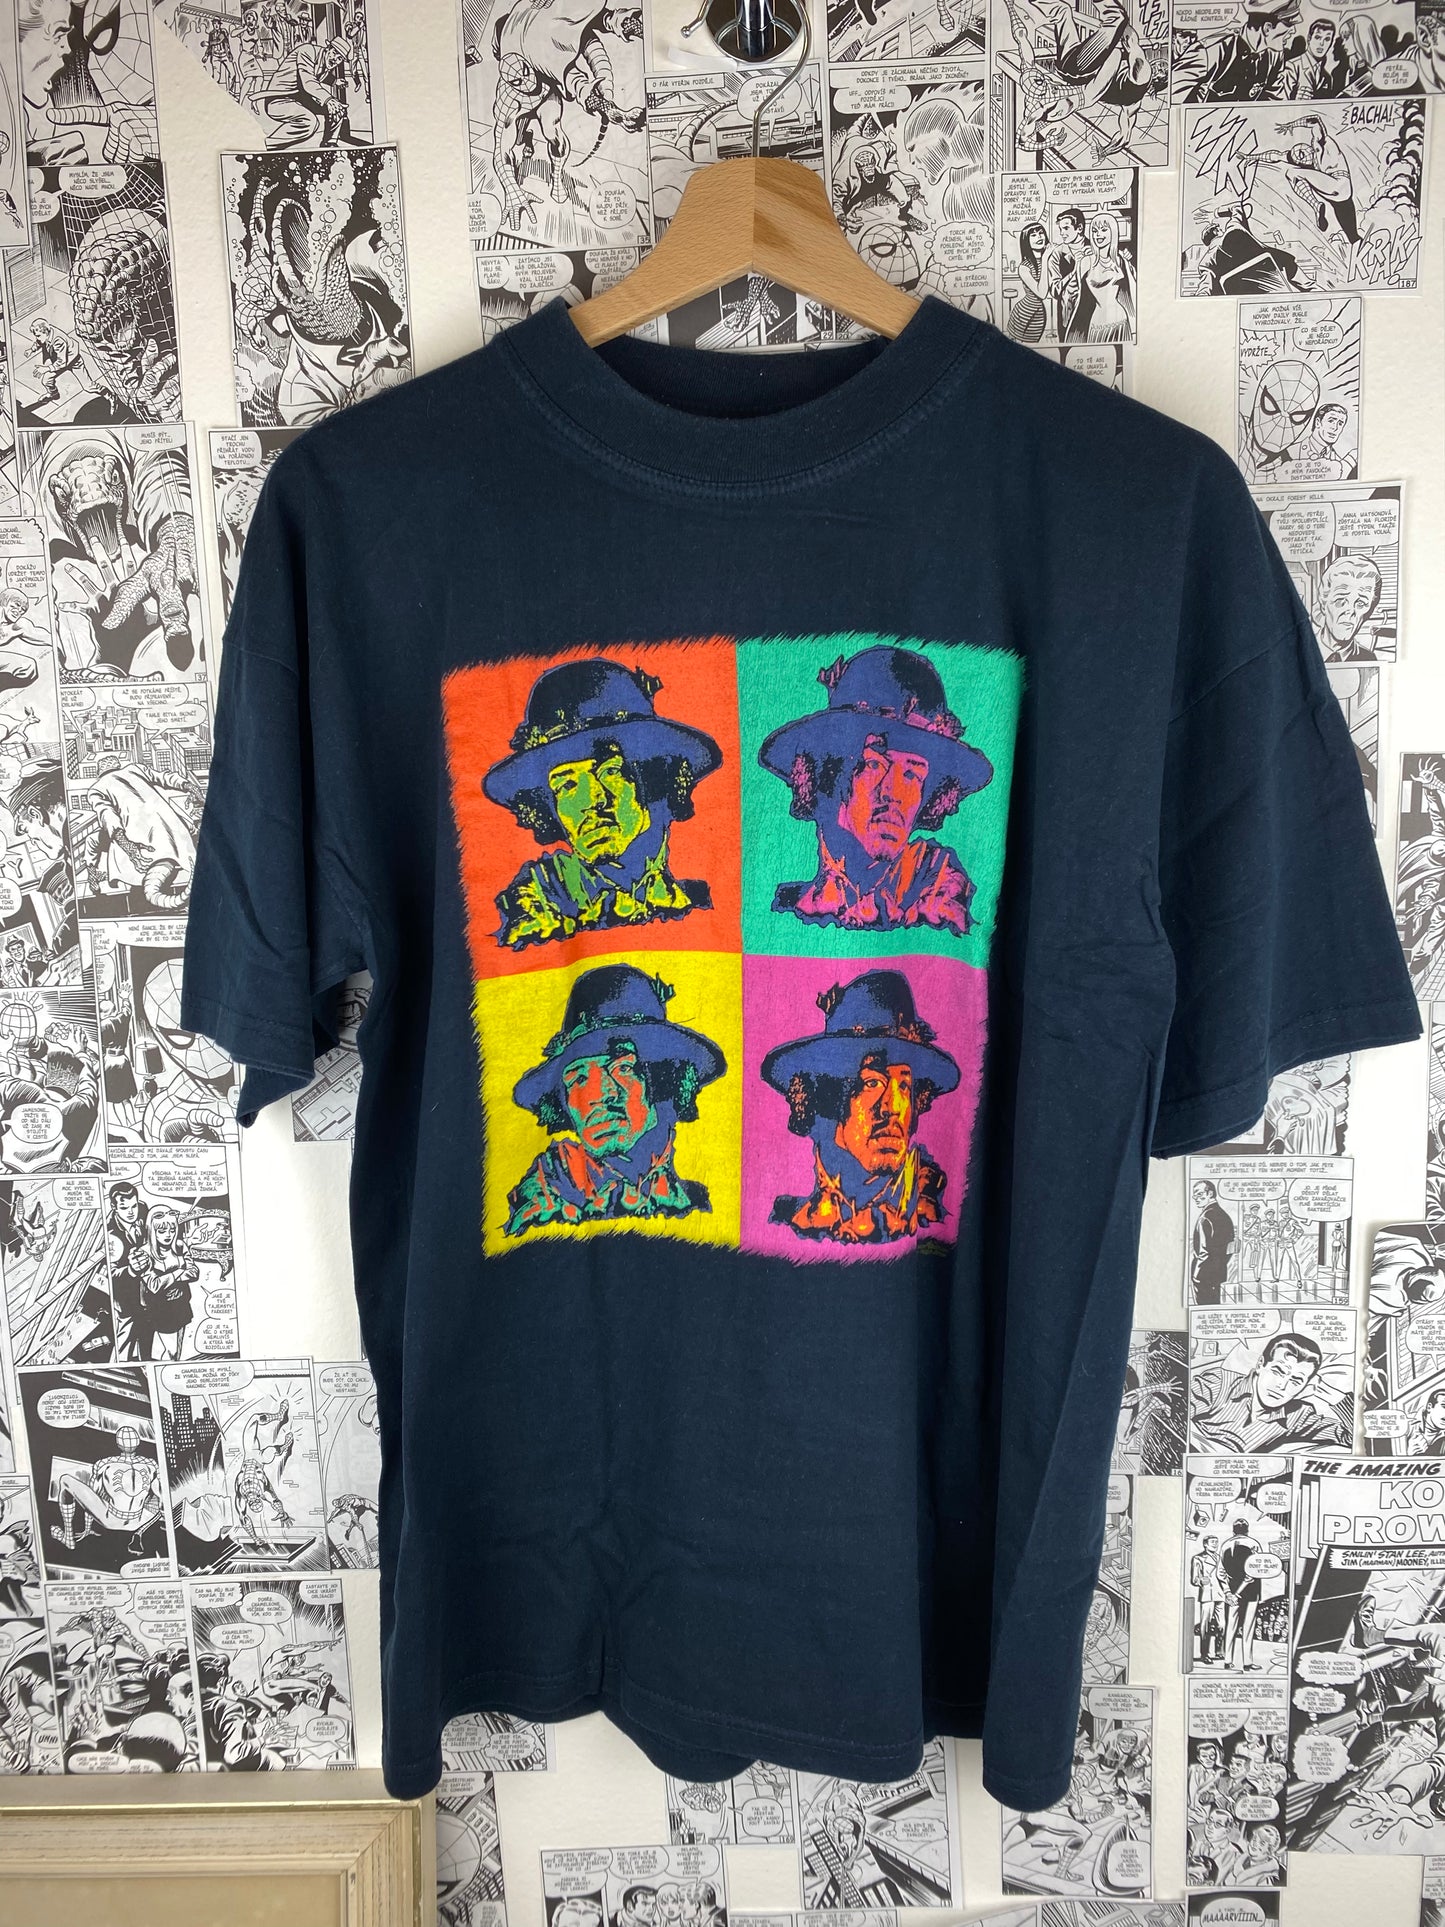 Vintage Jimi Hendrix Pop-Art t-shirt - size M